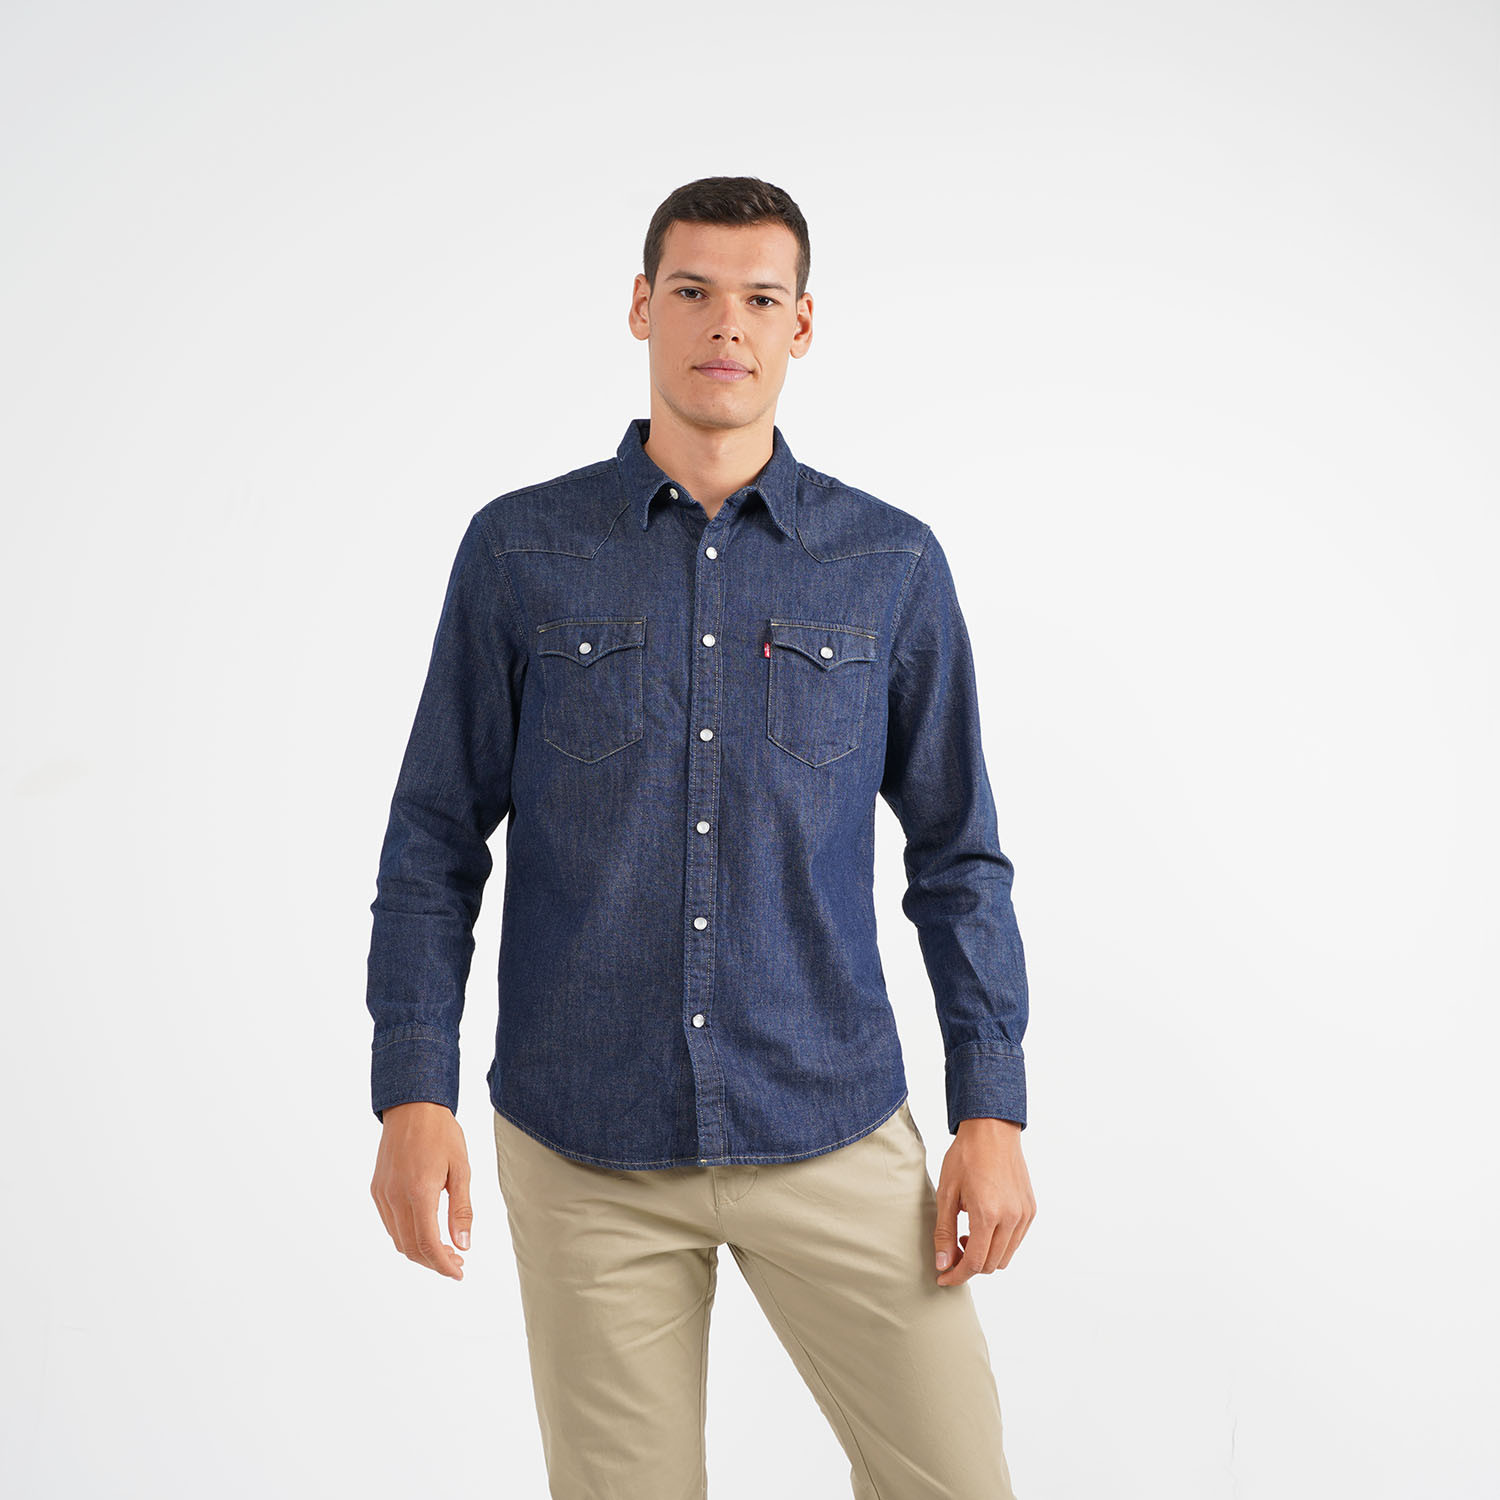 GANT Mens Barstow Denim Western Shirt Long Sleeve 100% Cotton REGULAR M L XL 2XL